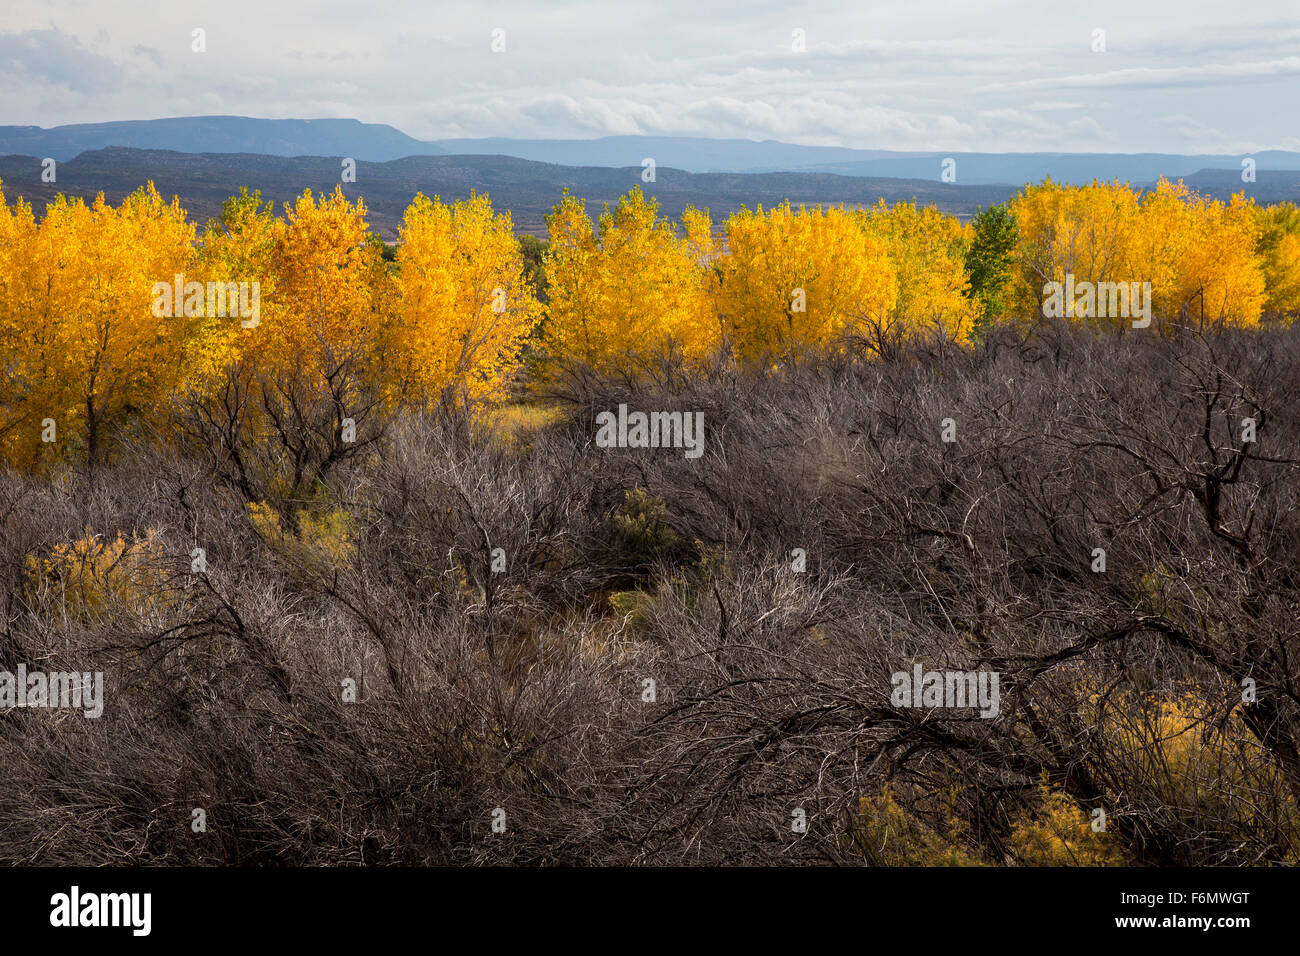 Moab, Utah - Farben des Herbstes entlang Eule zeichnen, normalerweise trocken Nebenfluss des Colorado River. Stockfoto